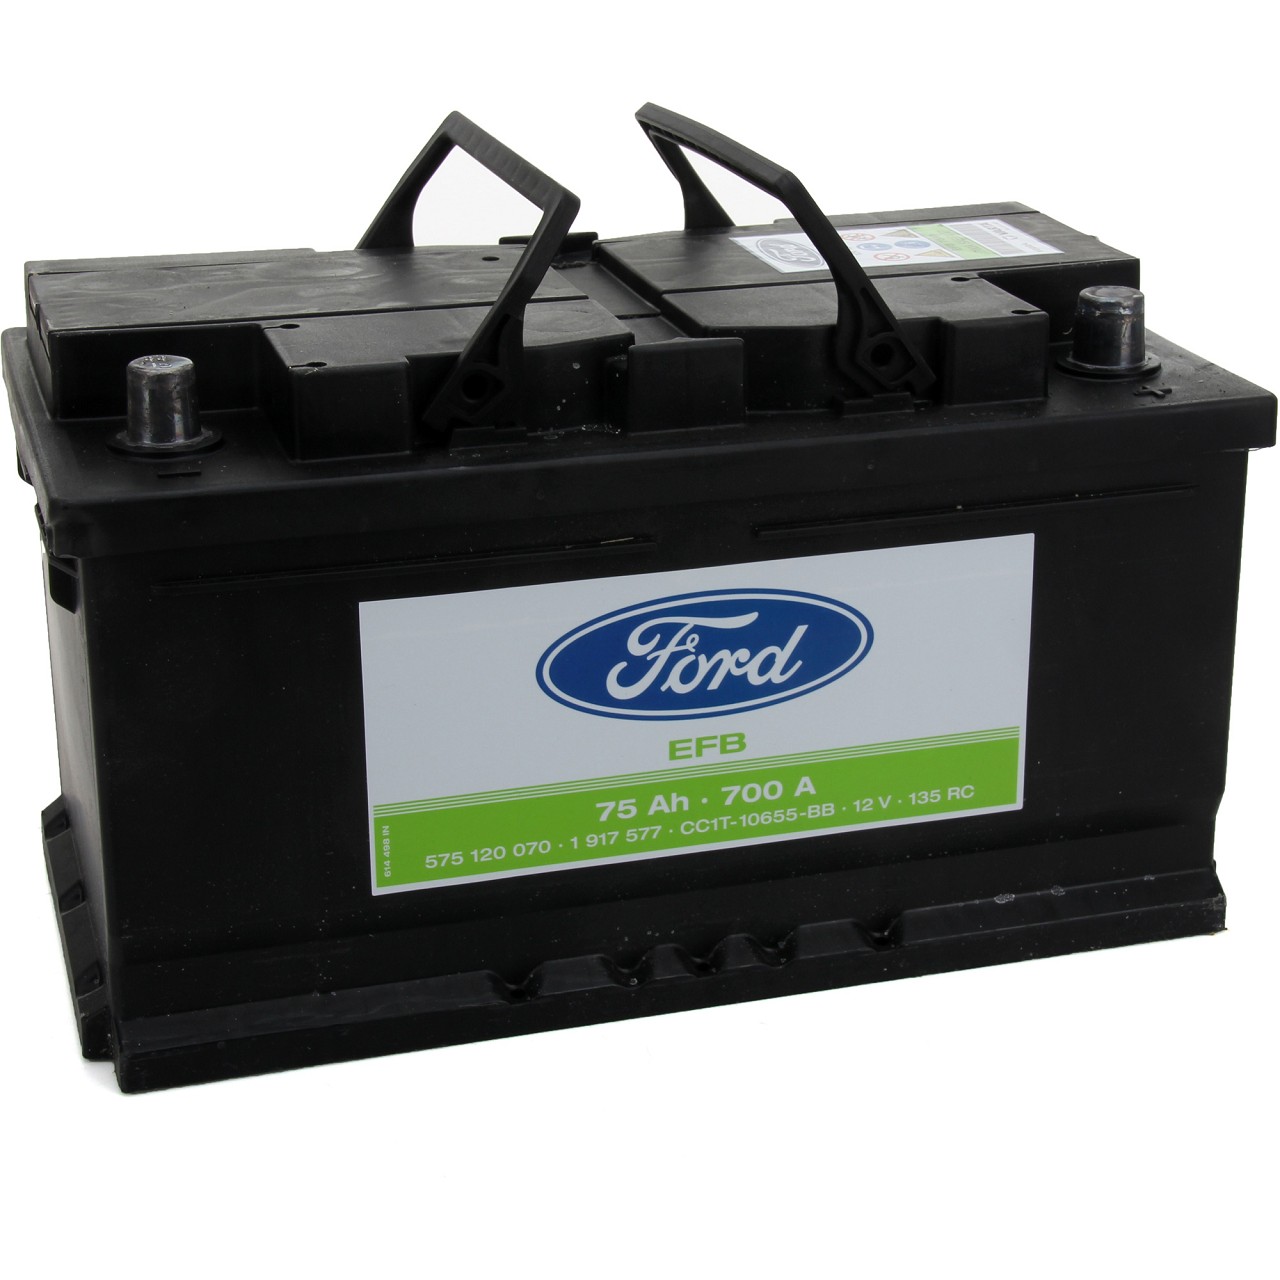 ORIGINAL Ford Autobatterie Batterie Starterbatterie 12V 75Ah 700A 1917577